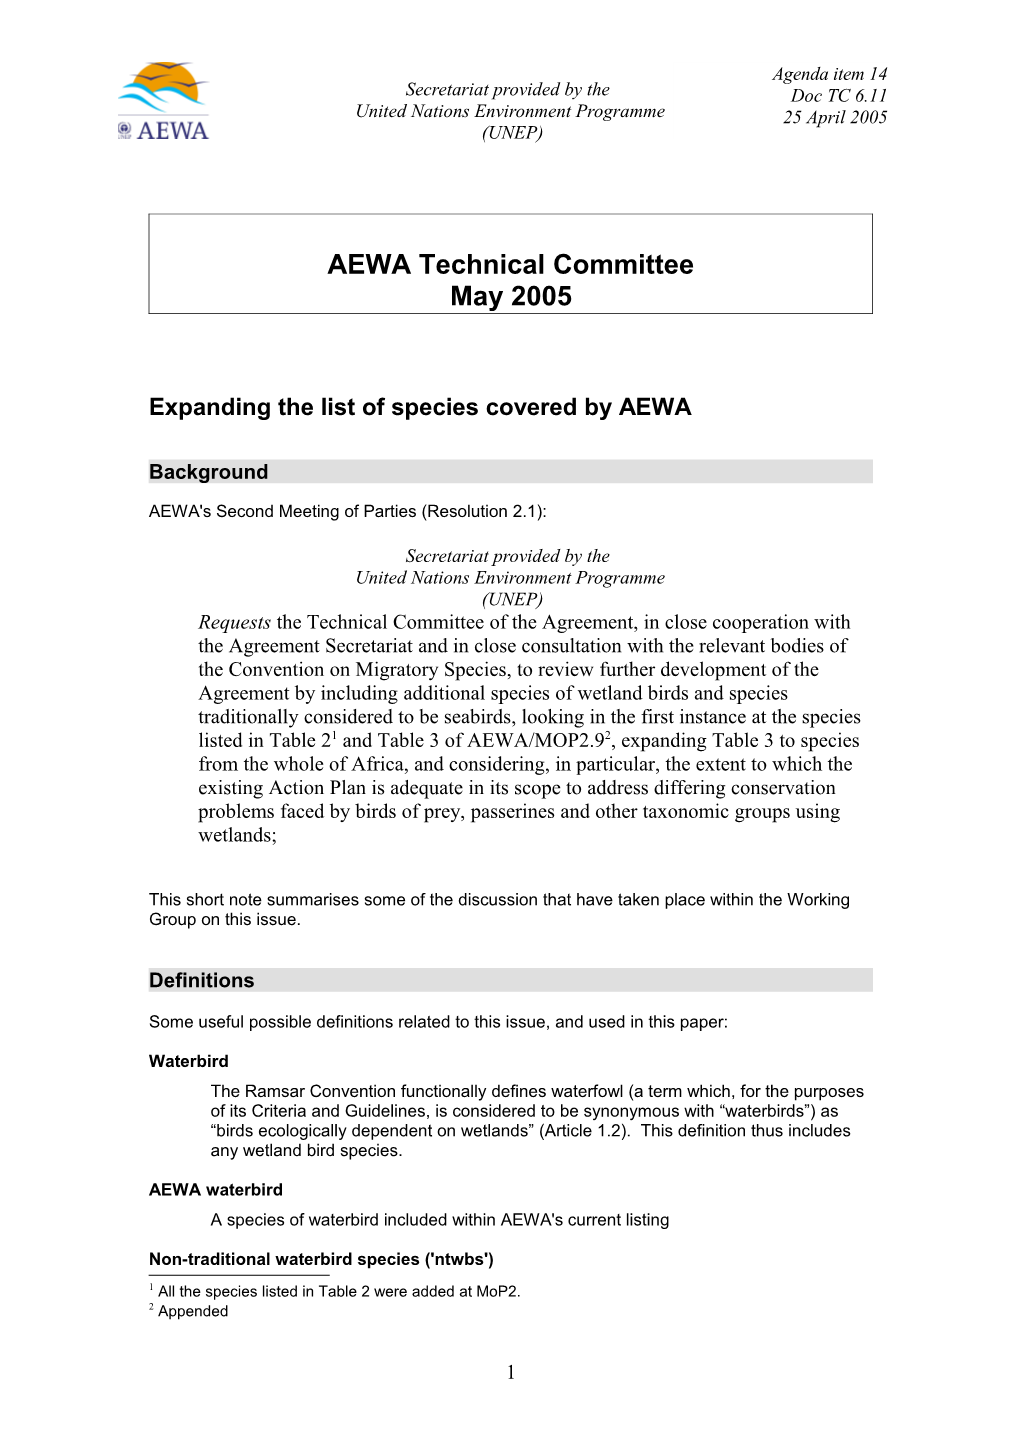 AEWA Technical Committee